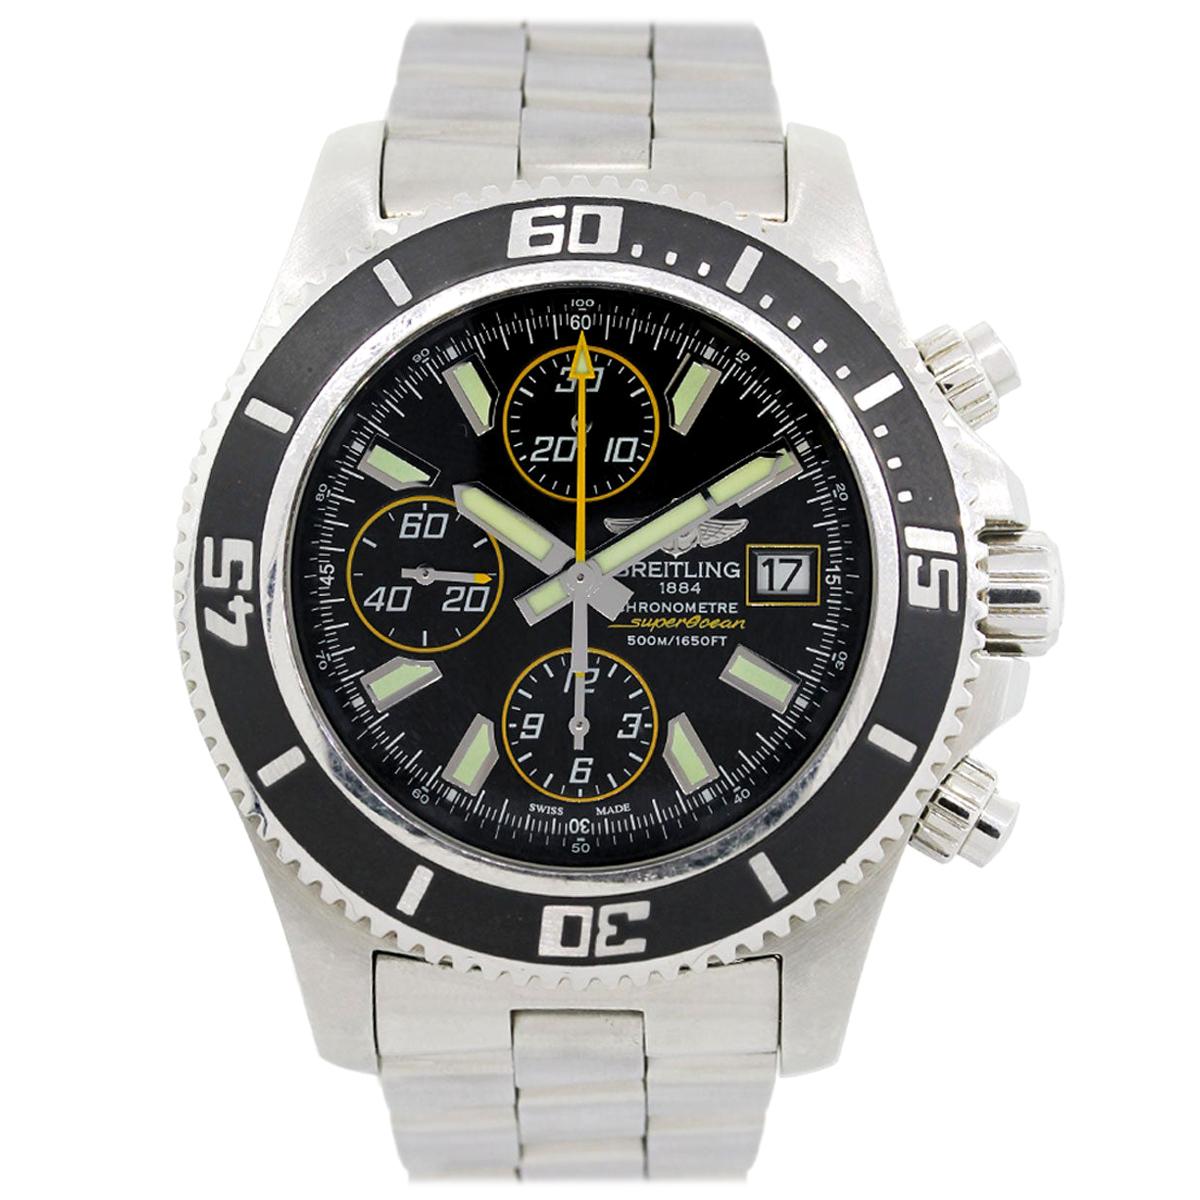 Breitling A13341 Superocean Wristwatch